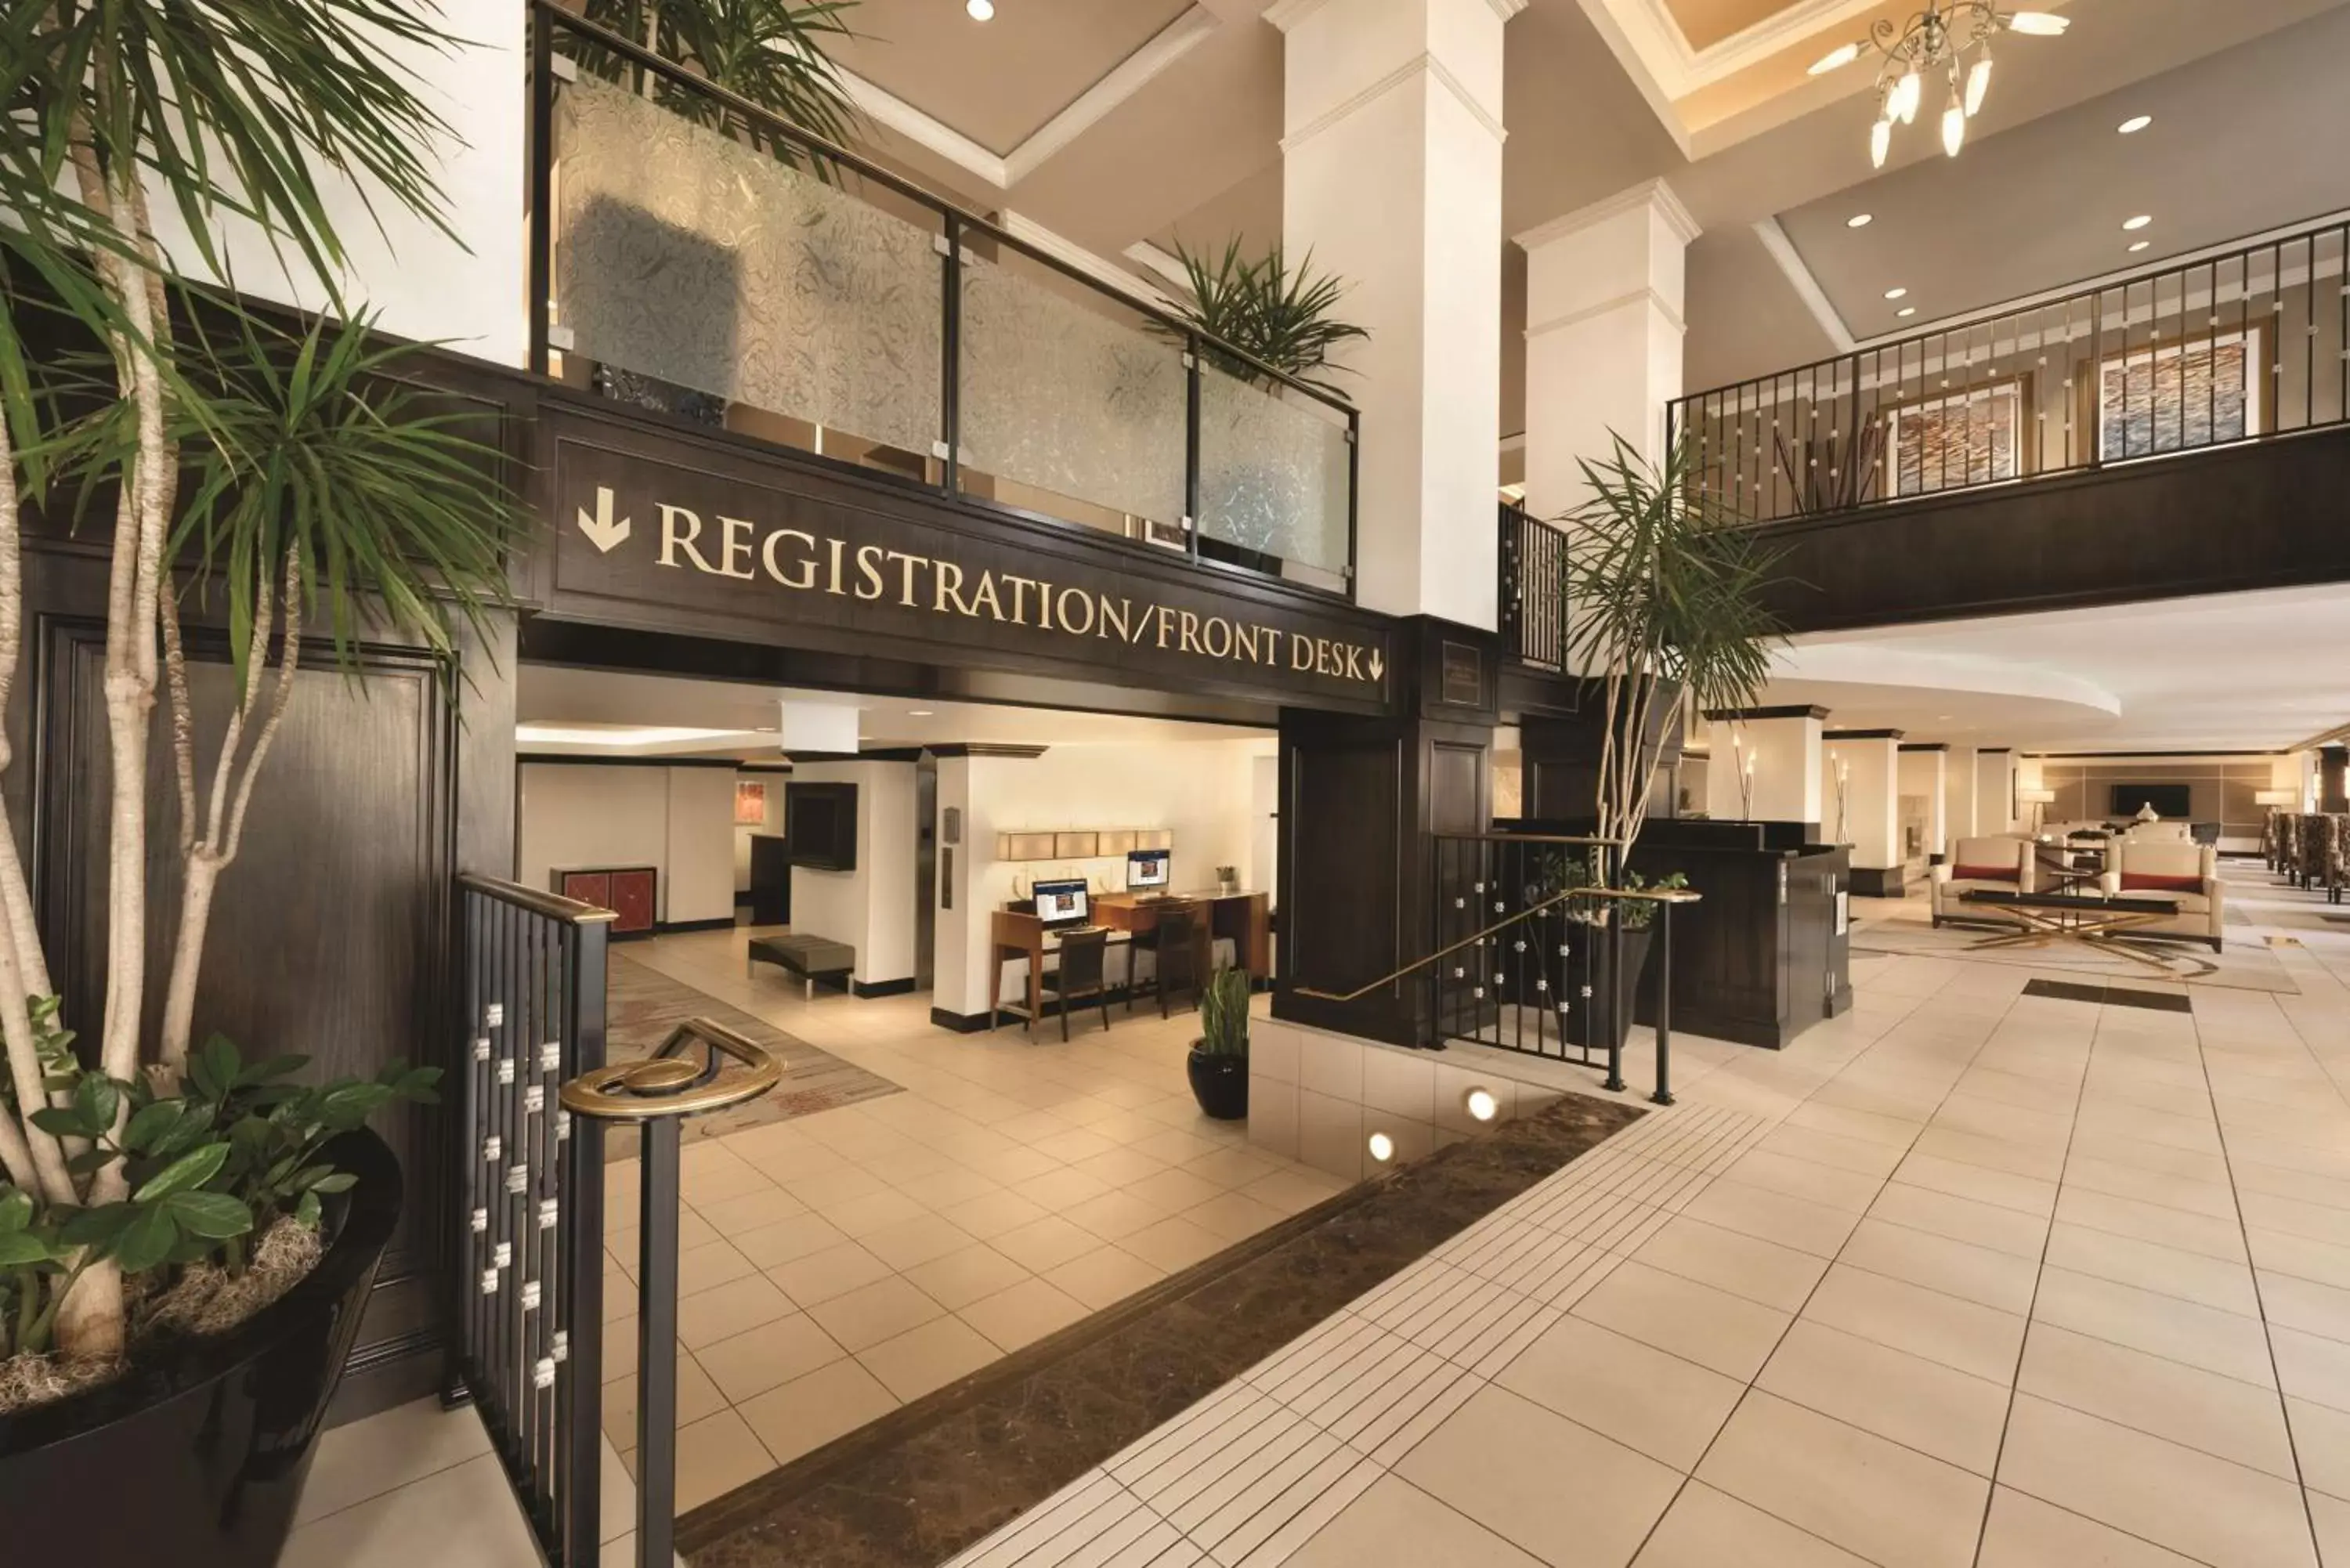 Lobby or reception in Hilton Orrington/Evanston